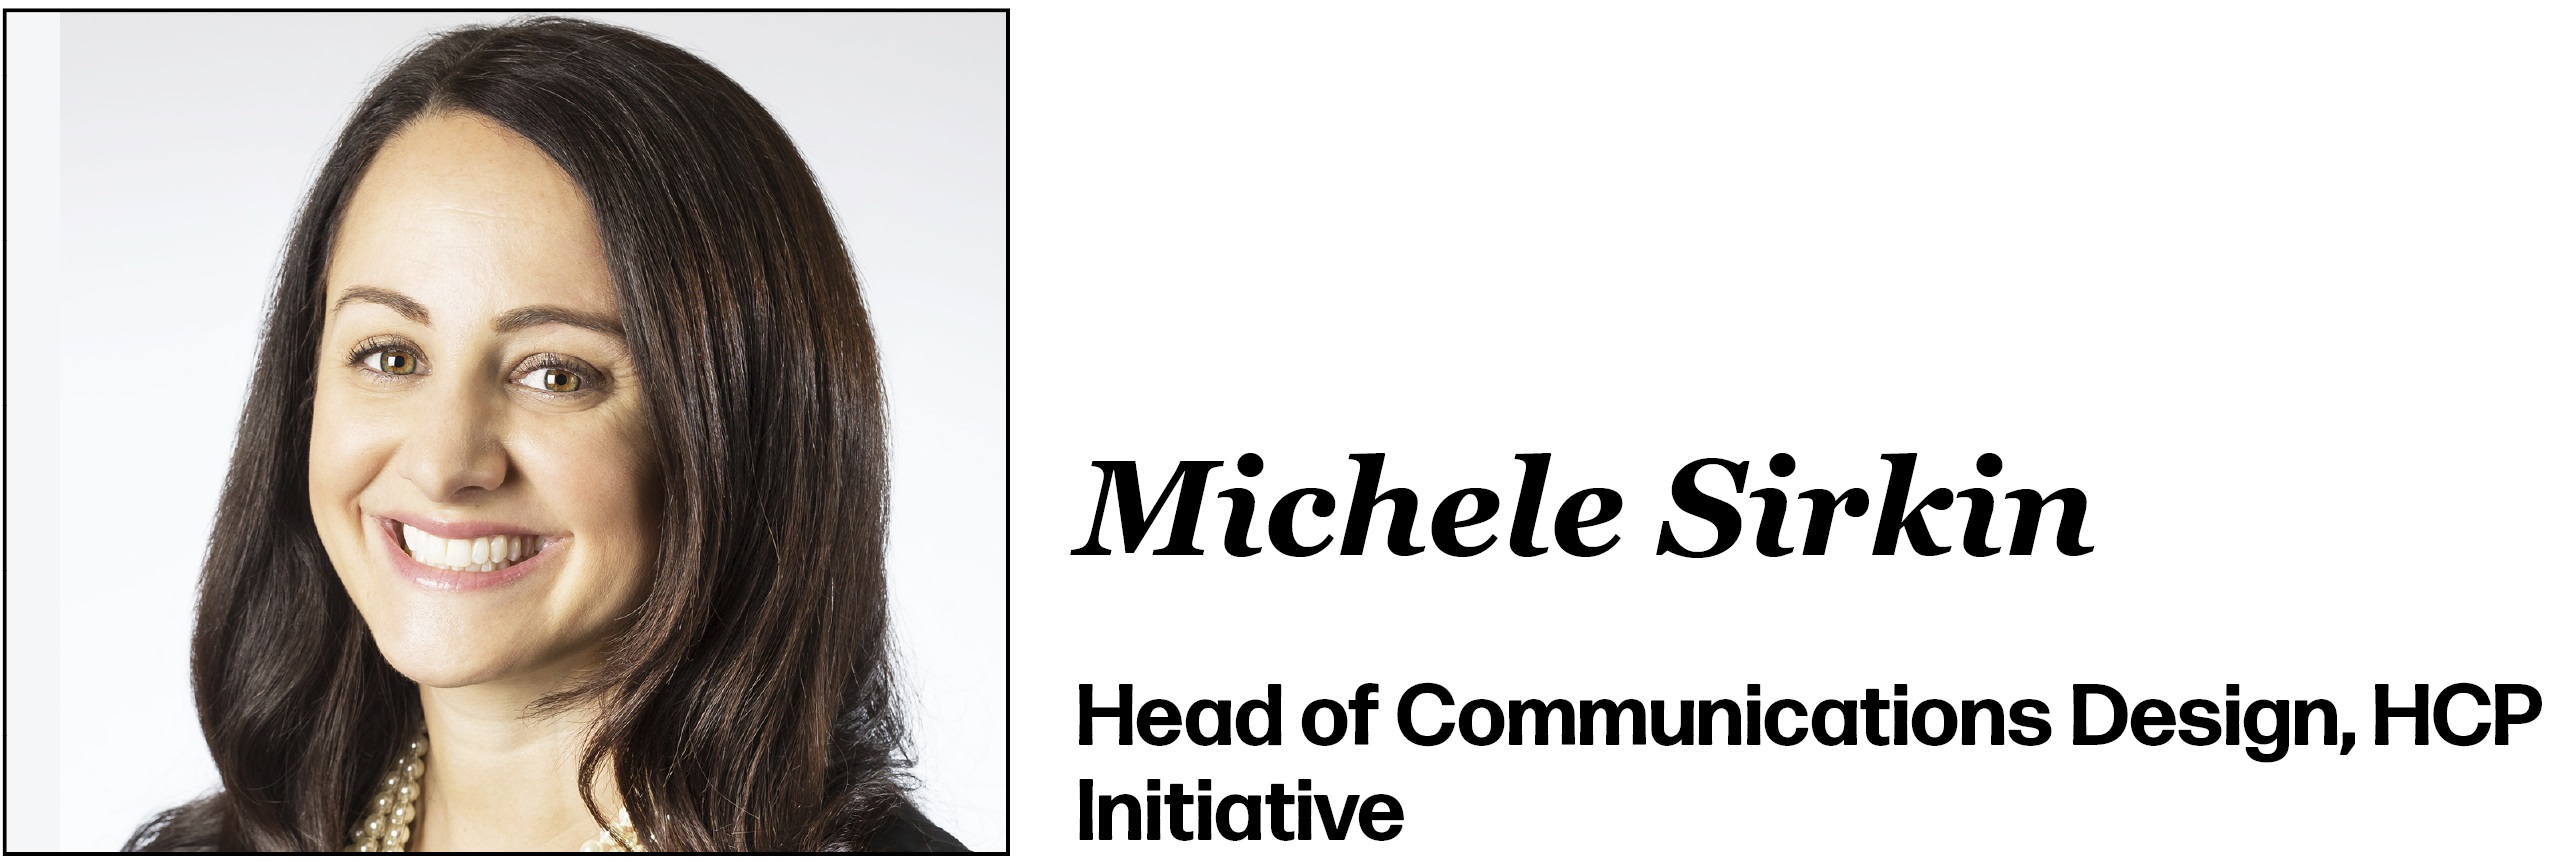 Michele Sirkin Head of Communications Design, HCP Initiative